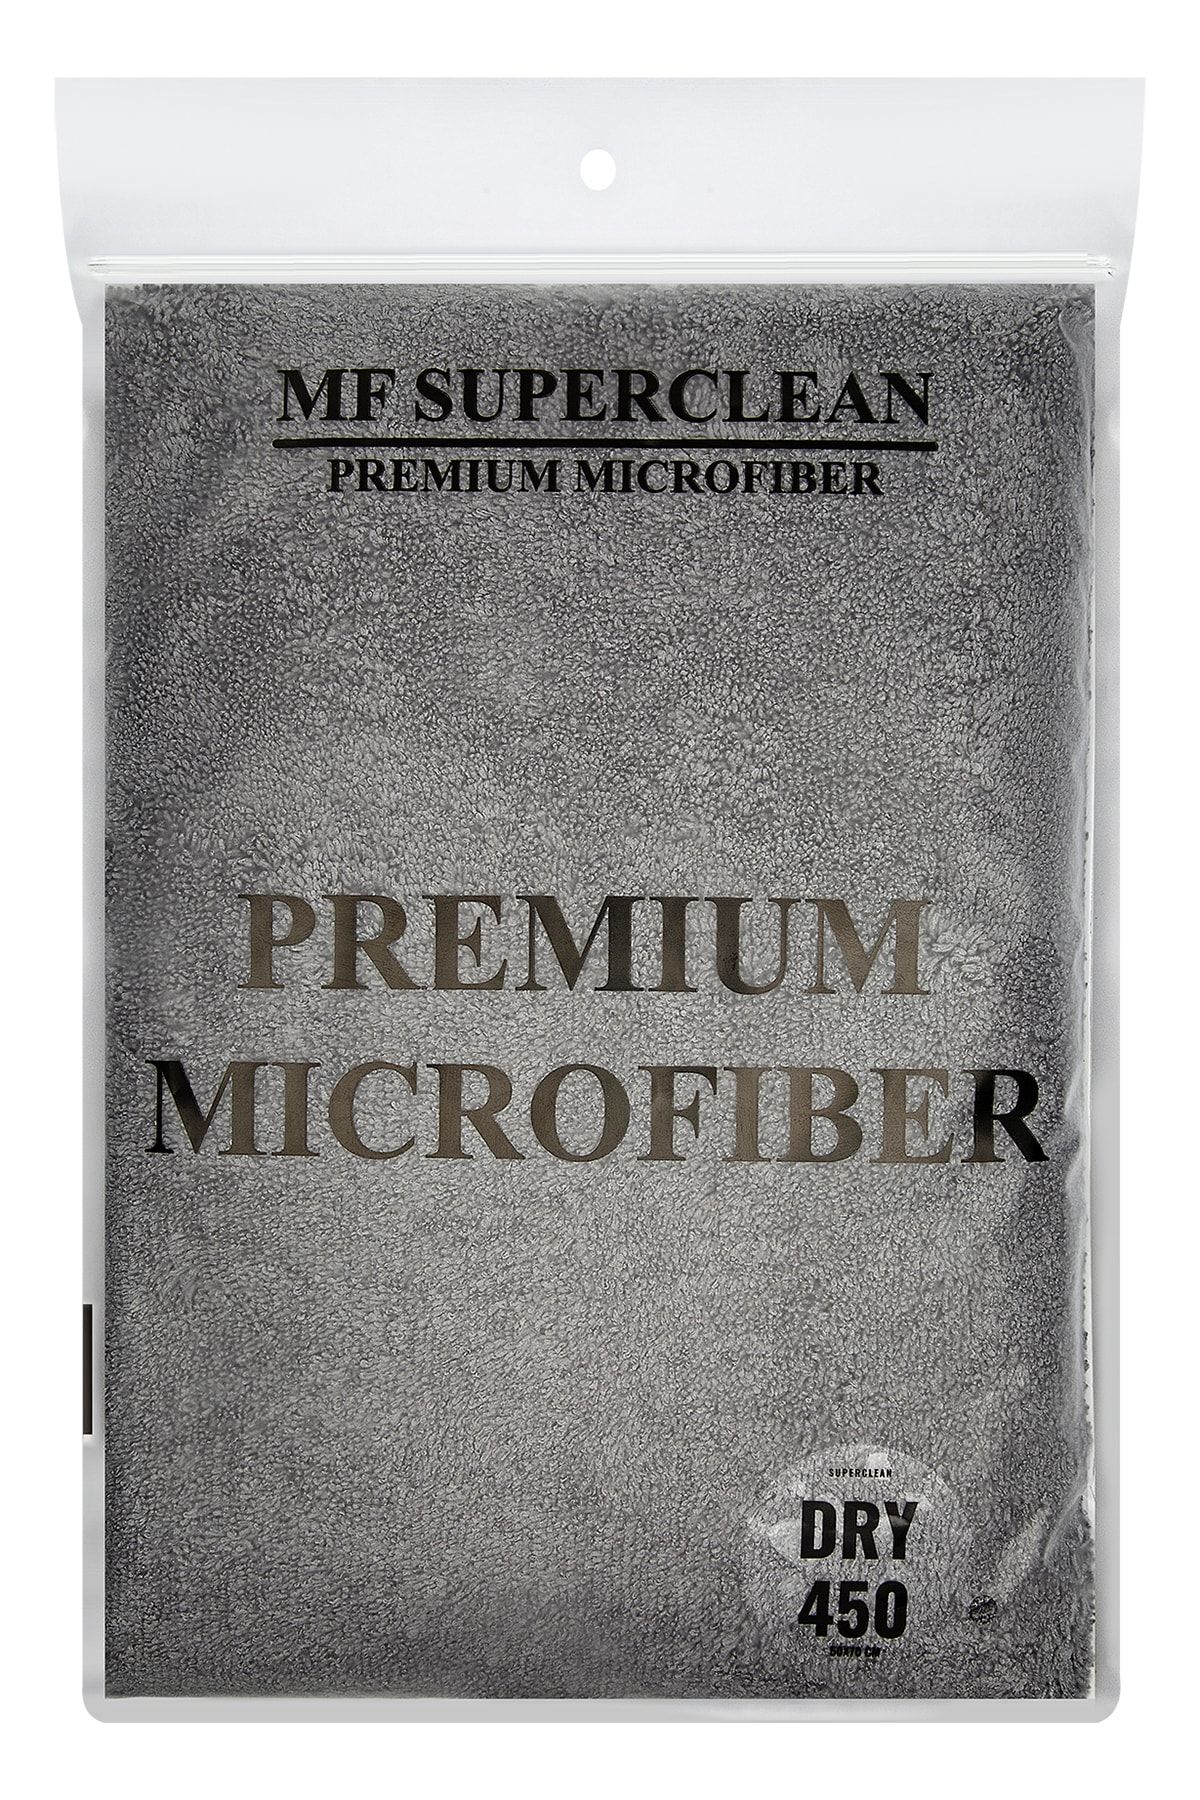 MF SuperClean Super Mikrofiber Oto Kurulama Havlusu 50x70 Cm - 450 Gsm